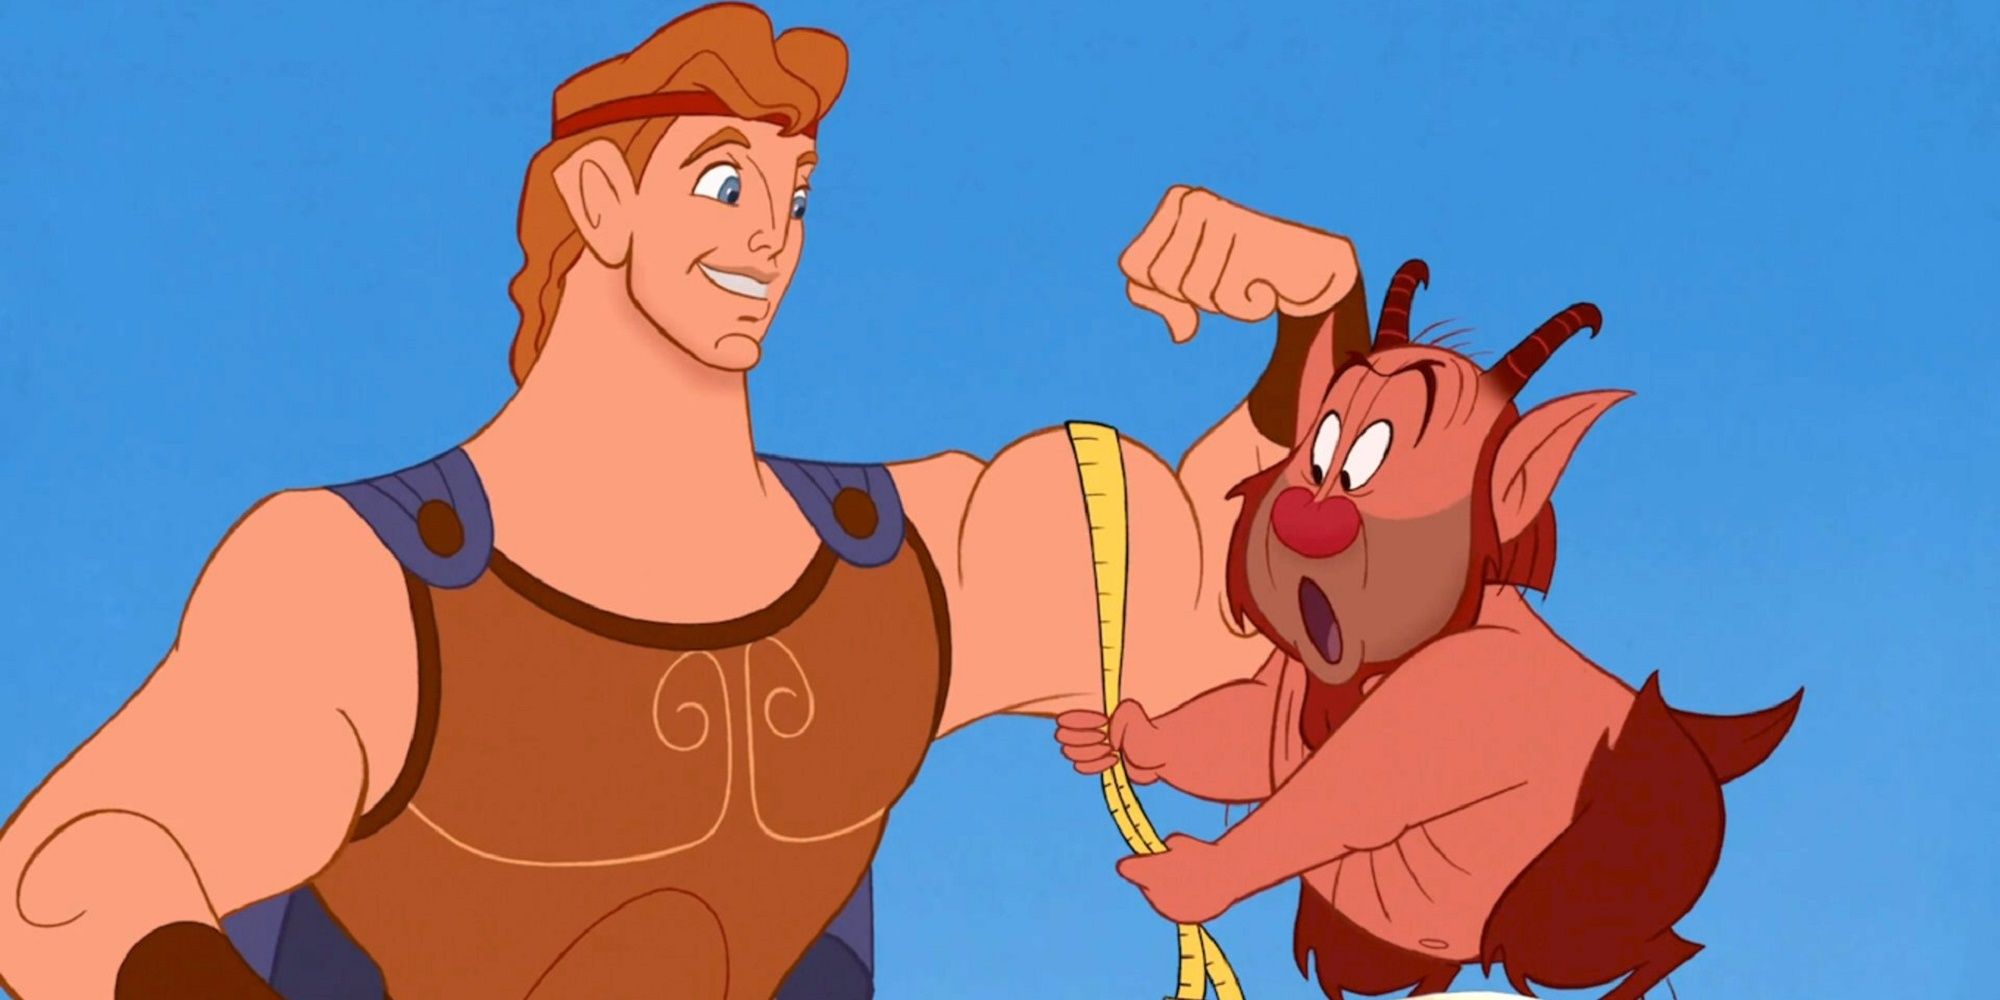 Hercules getting his muscles measured in Hercules.